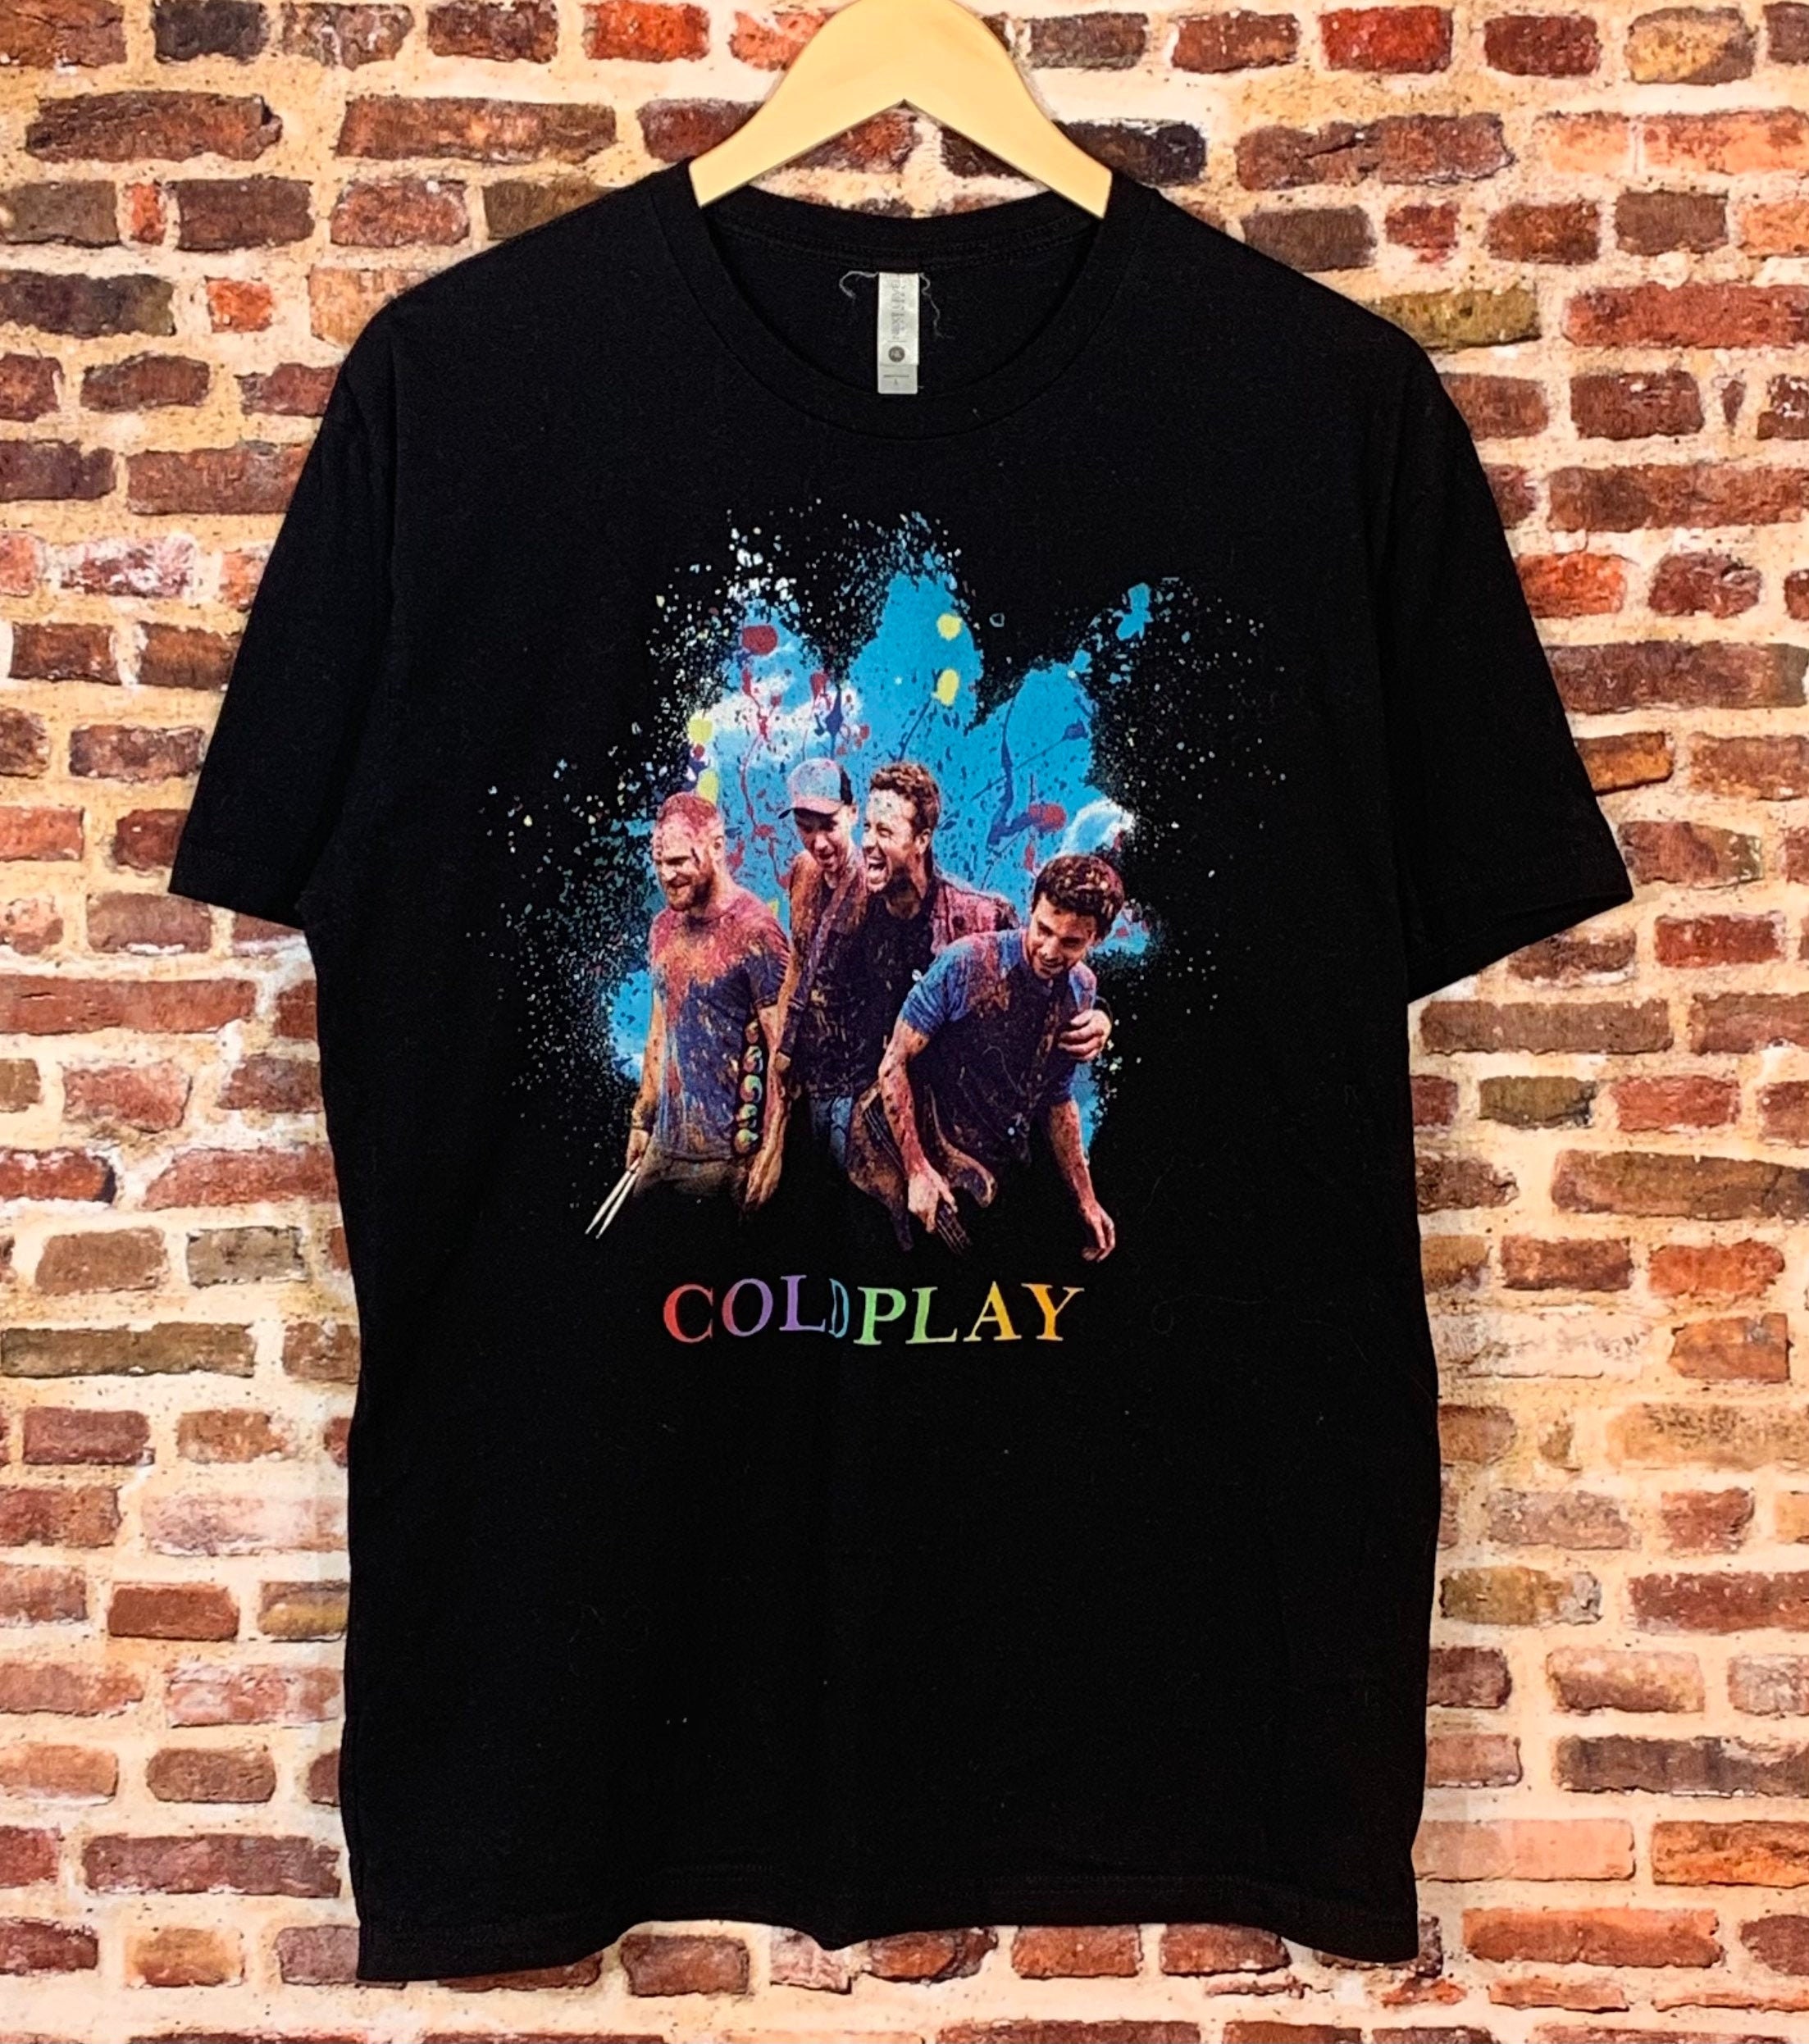 coldplay a head full of dreams tour 2017 t shirt